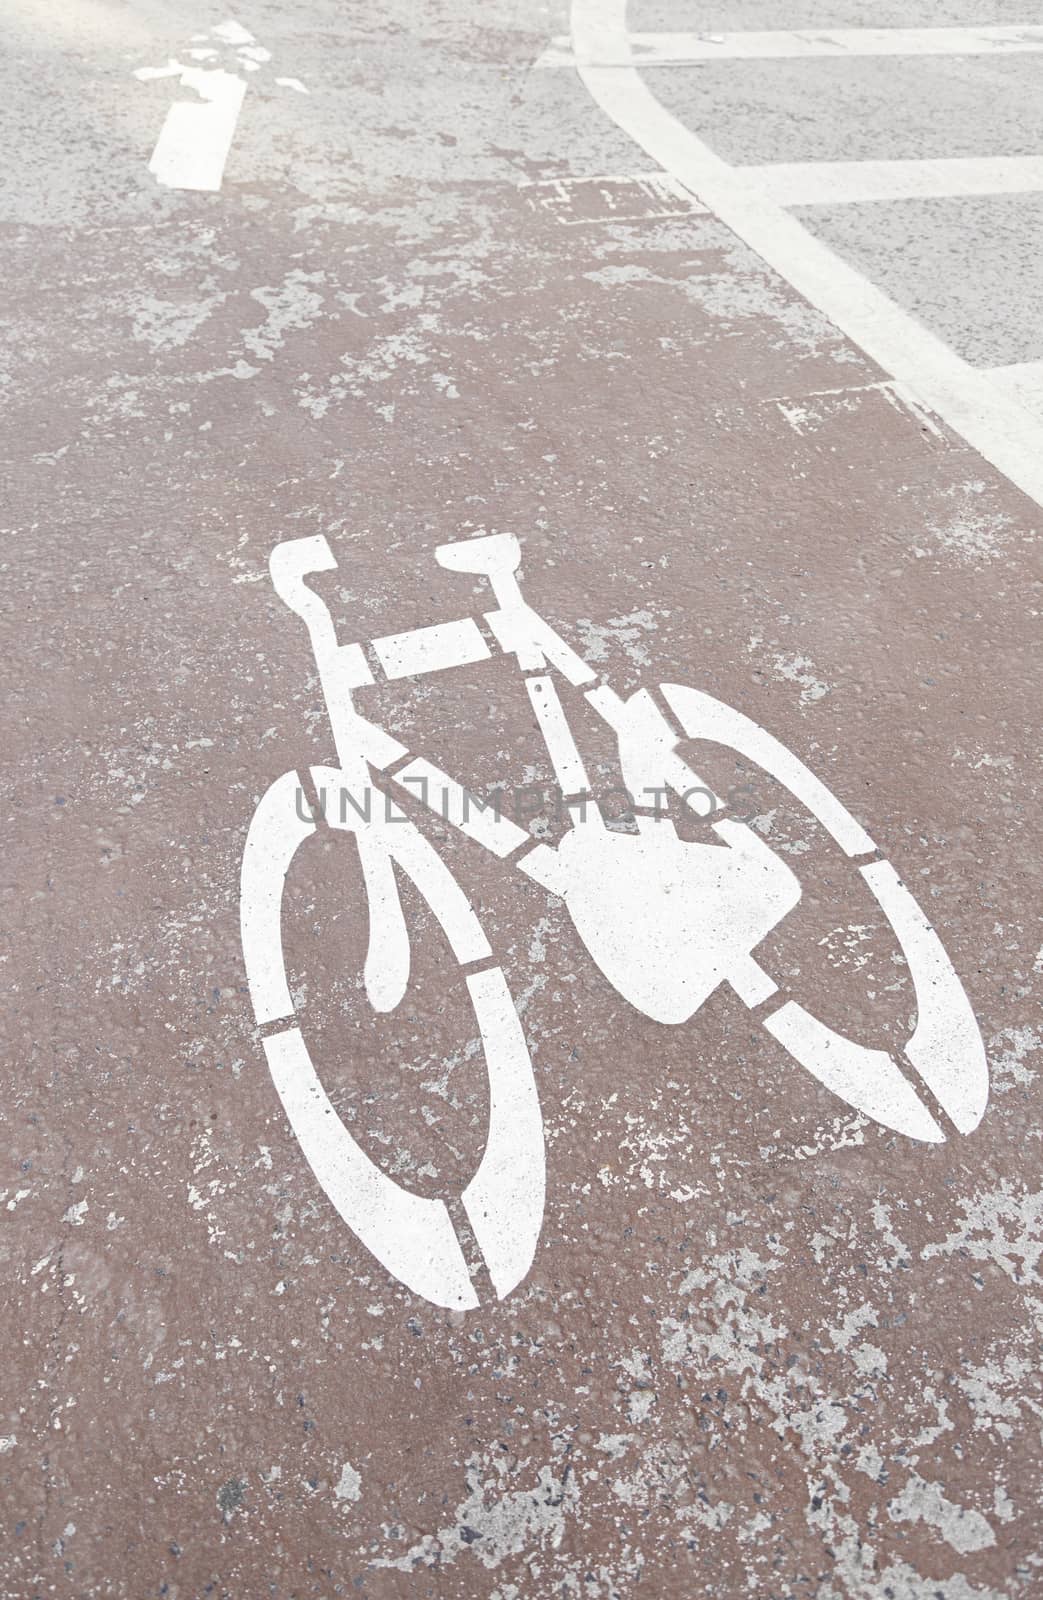 Bicycle sign on asphalt by esebene